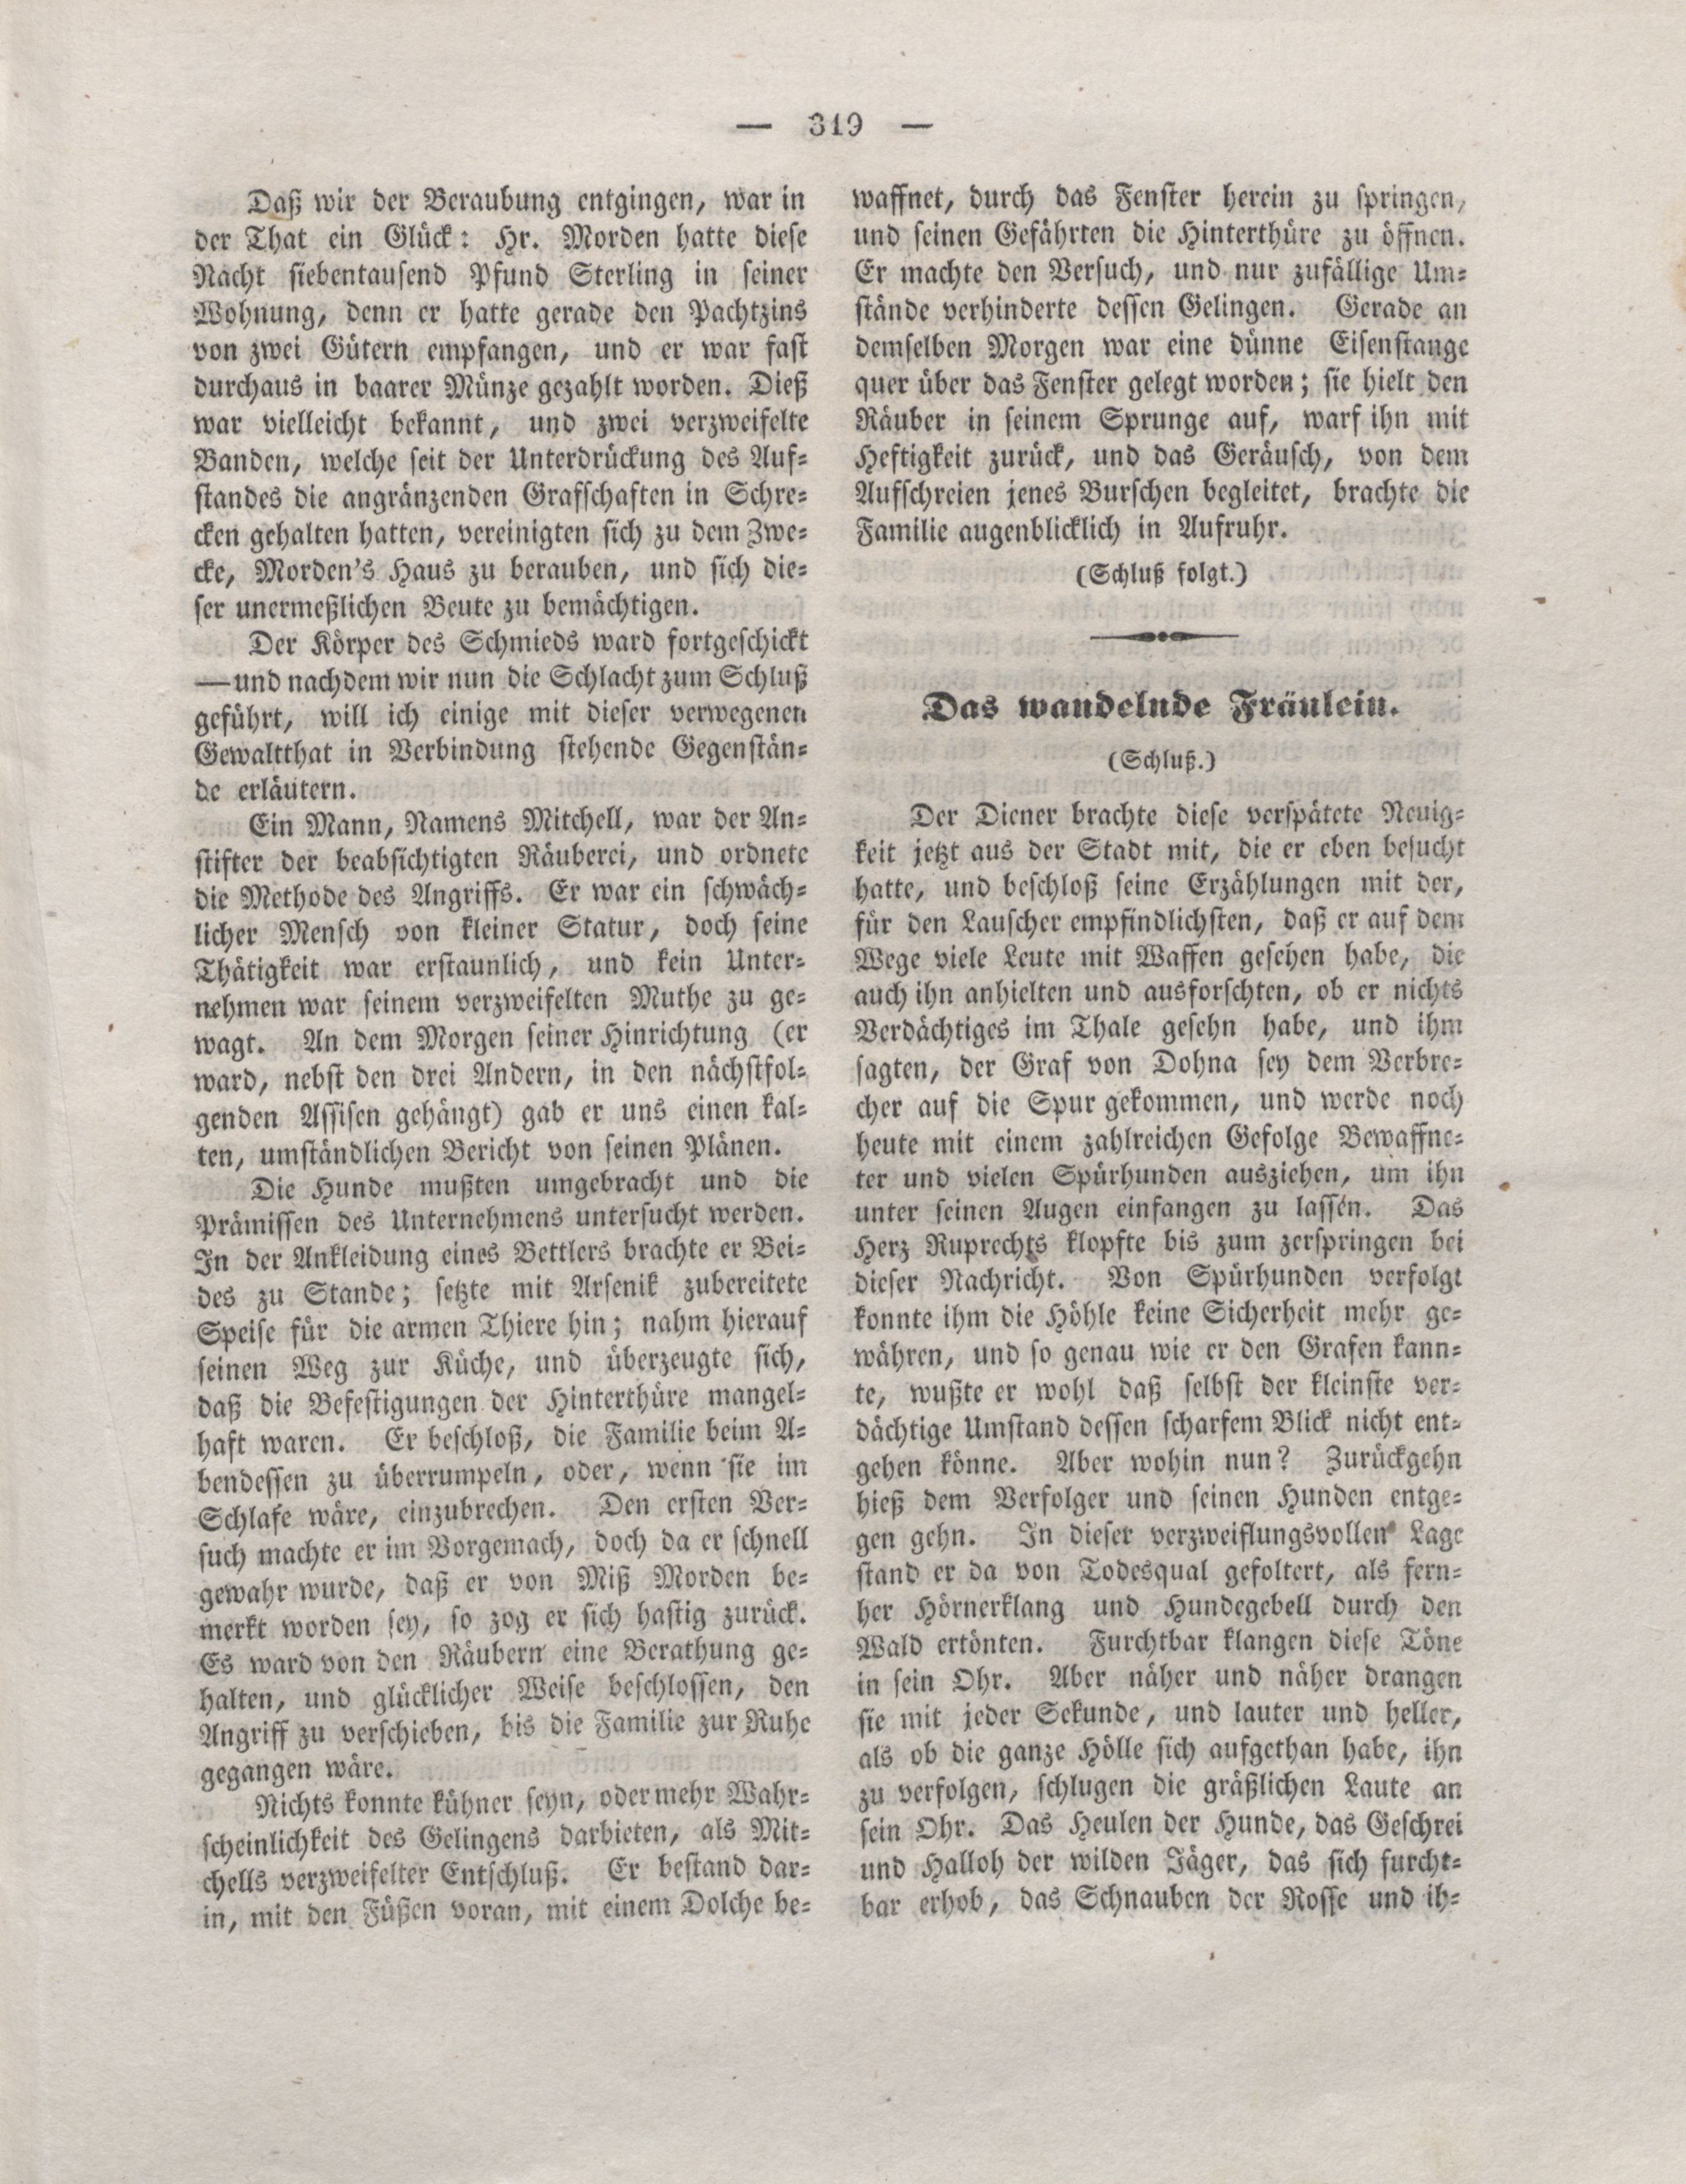 Der Refraktor [1837] (1837) | 35. (319) Põhitekst